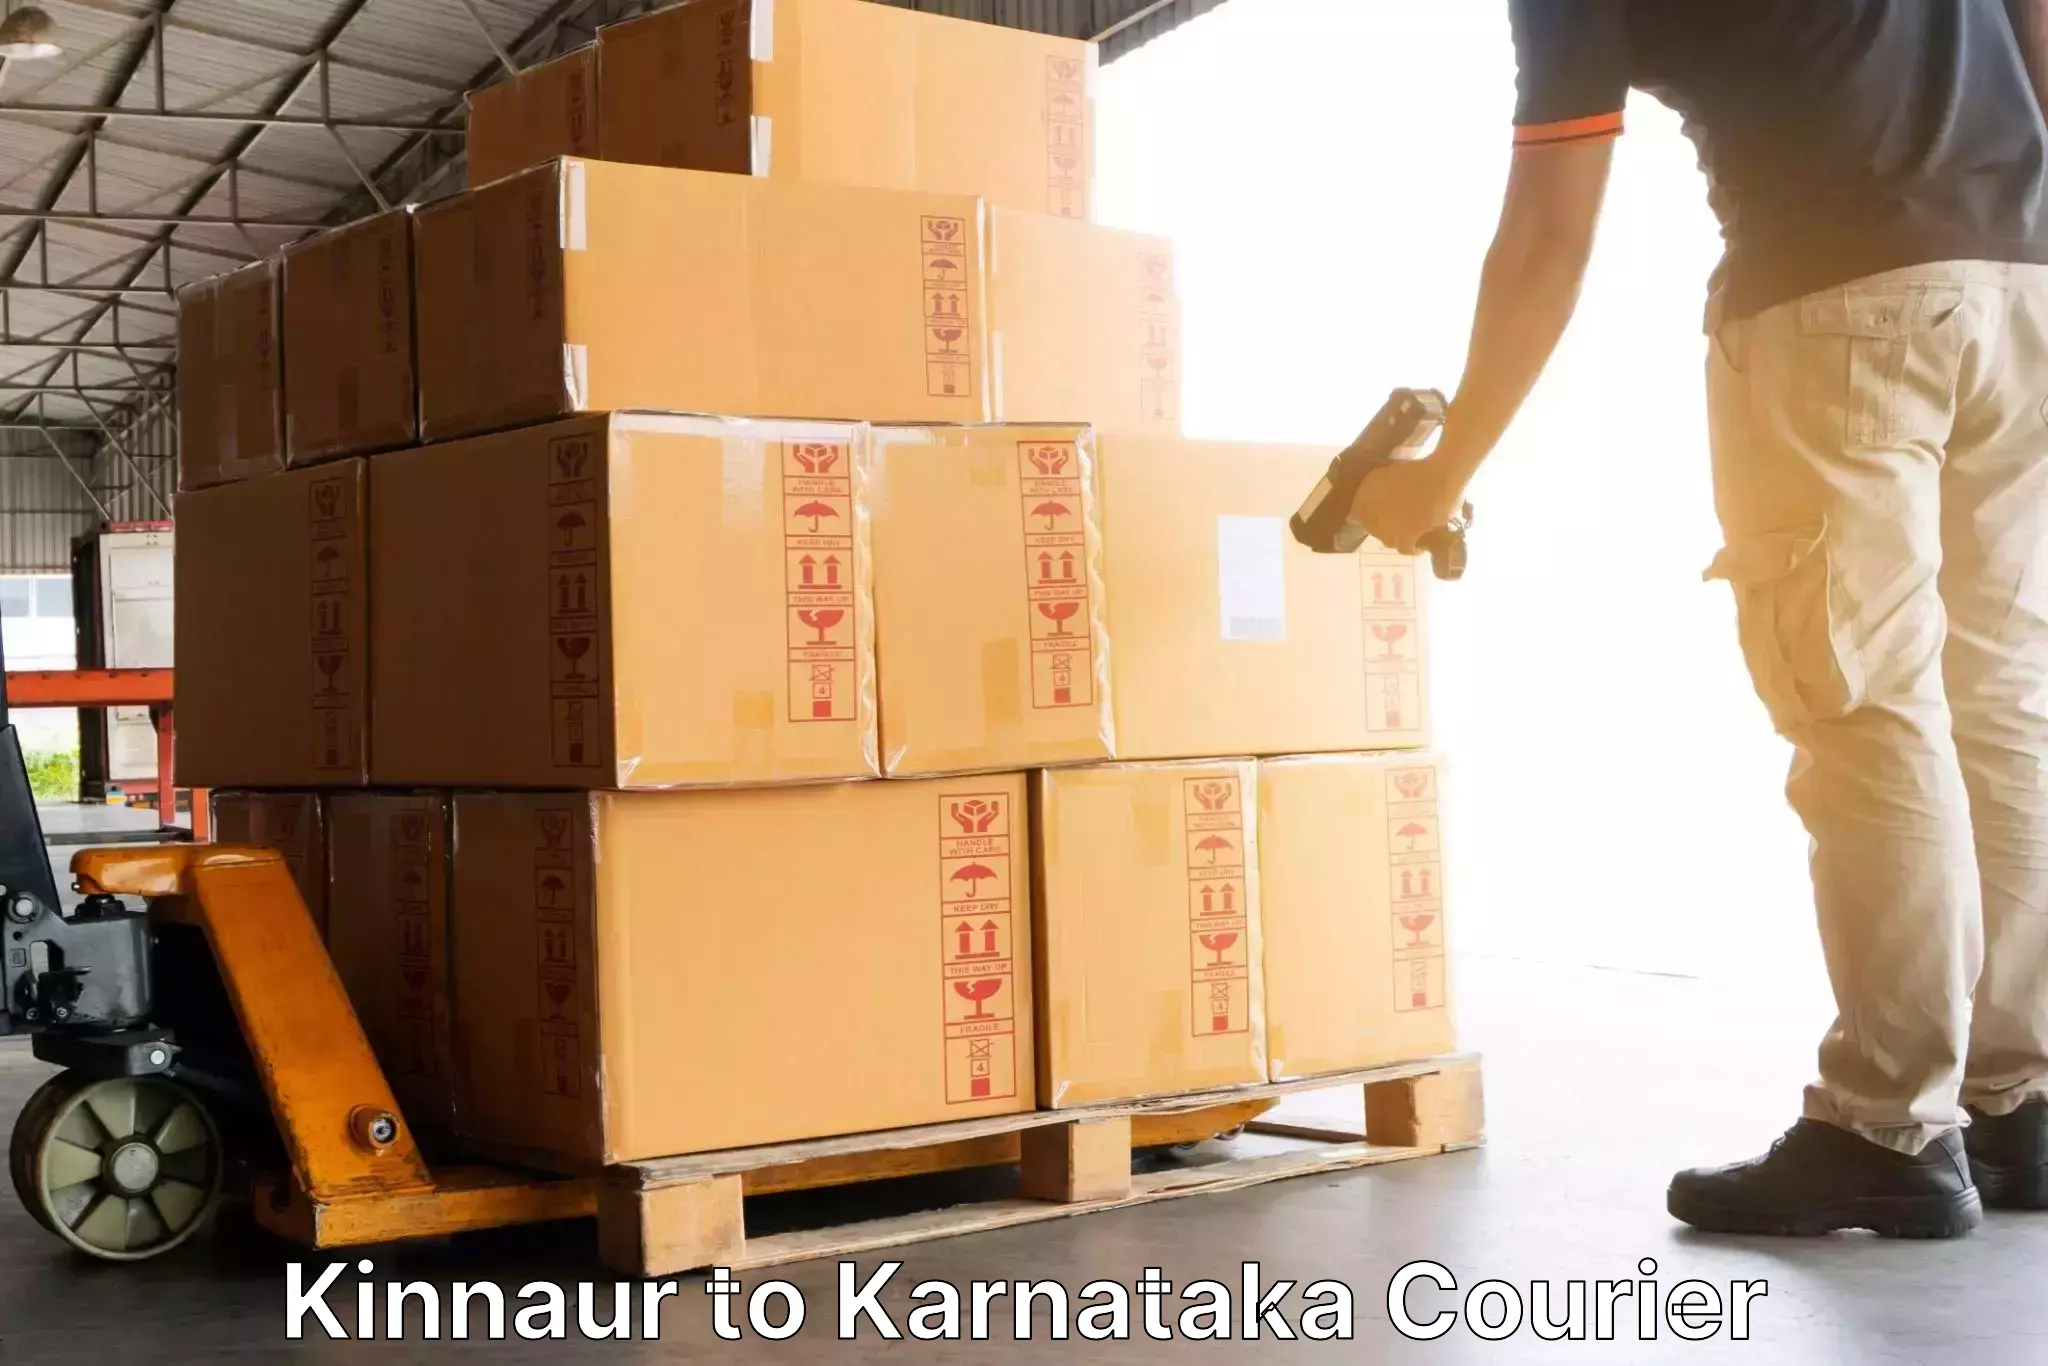 Courier service comparison in Kinnaur to Nipani